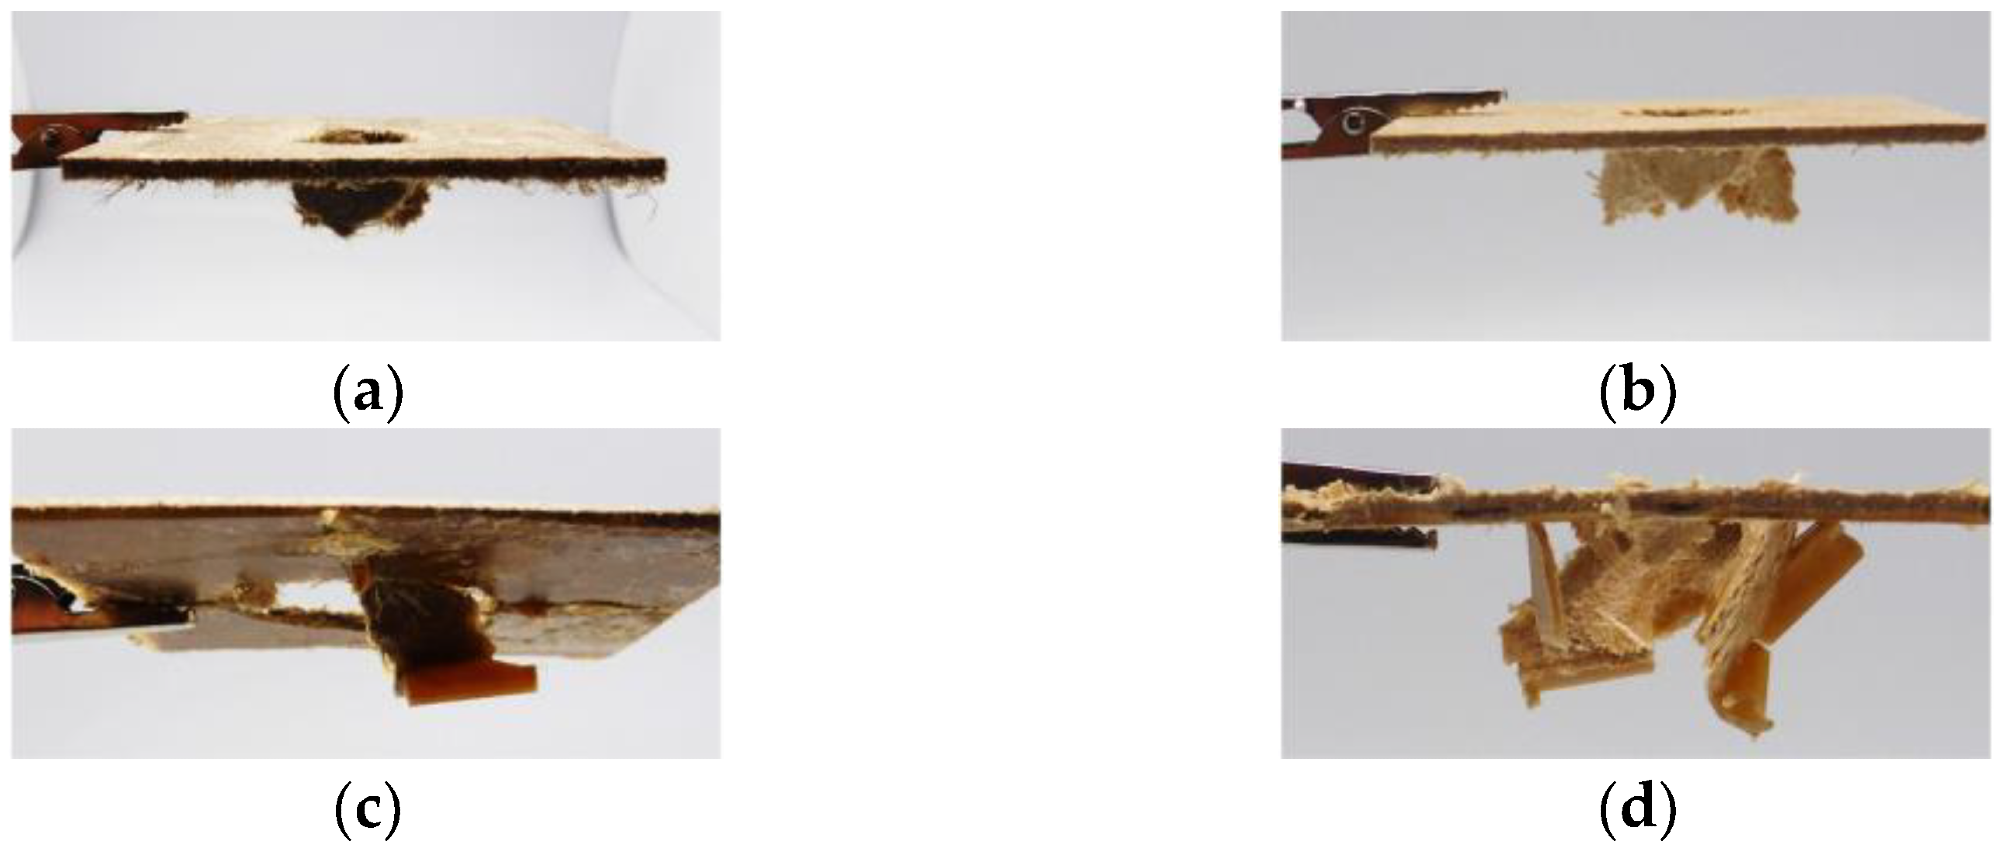 Exemplary specimen after impact test. (a) natural fiber non-woven; (b) wood fiber non-woven; (c) natural fiber non-woven with reinforcement rib (hybrid); (d) wood fiber non-woven with reinforcement rib (hybrid).